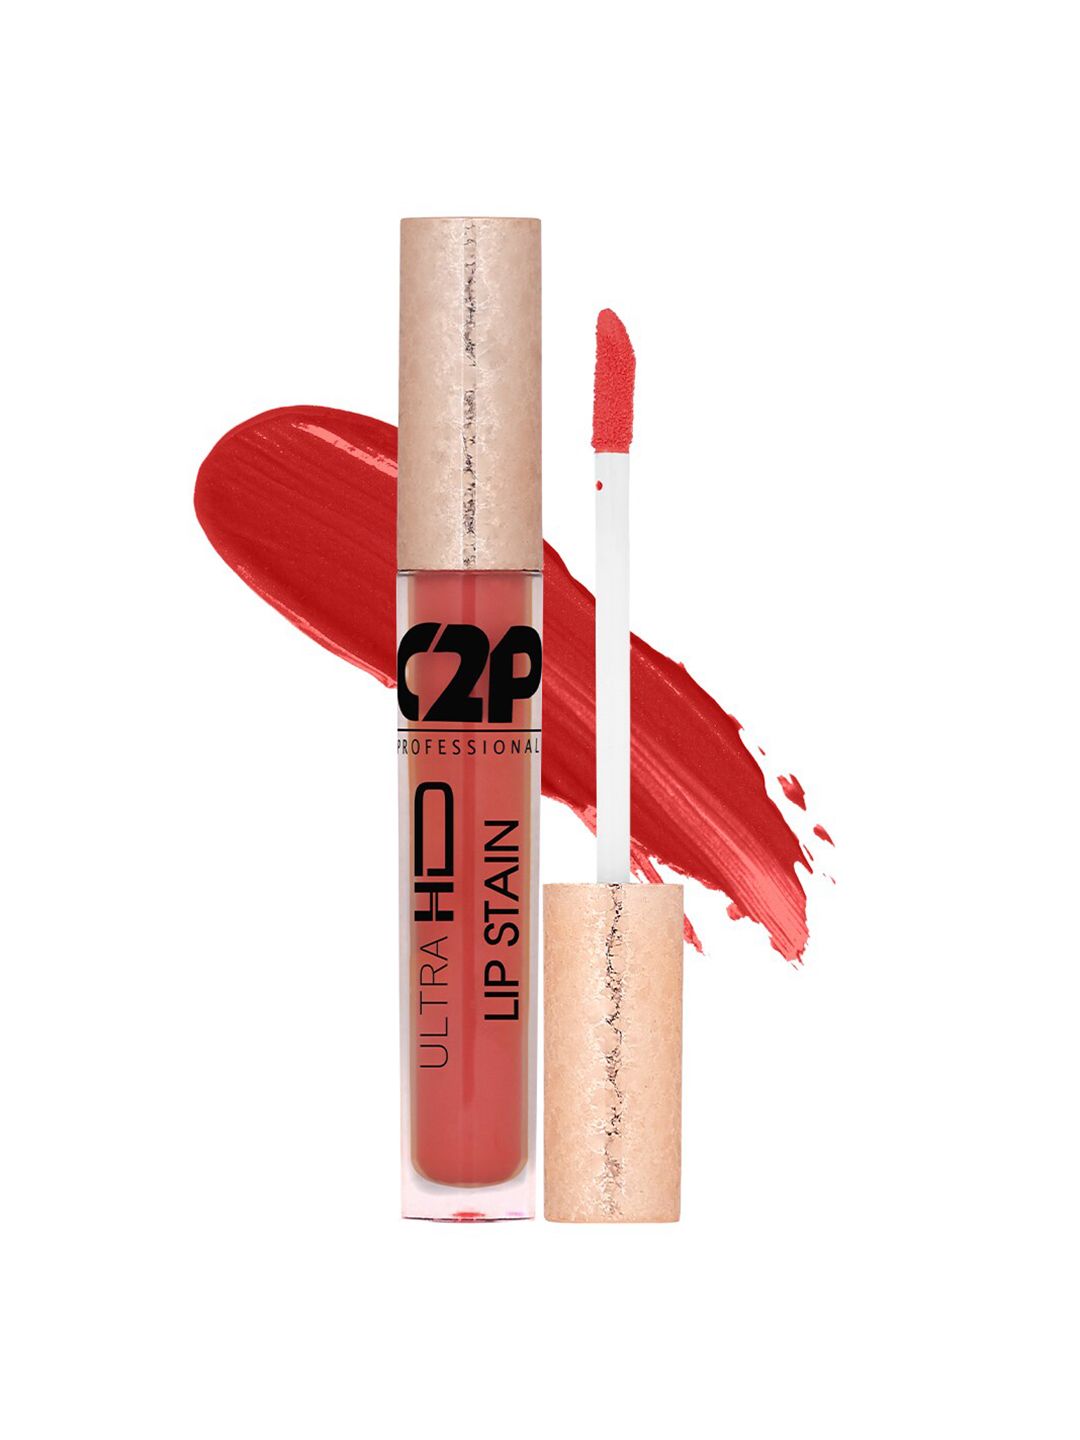 C2P PROFESSIONAL MAKEUP  Lip Stain Liquid Lipstick - Pink Mood 26 5ml Price in India